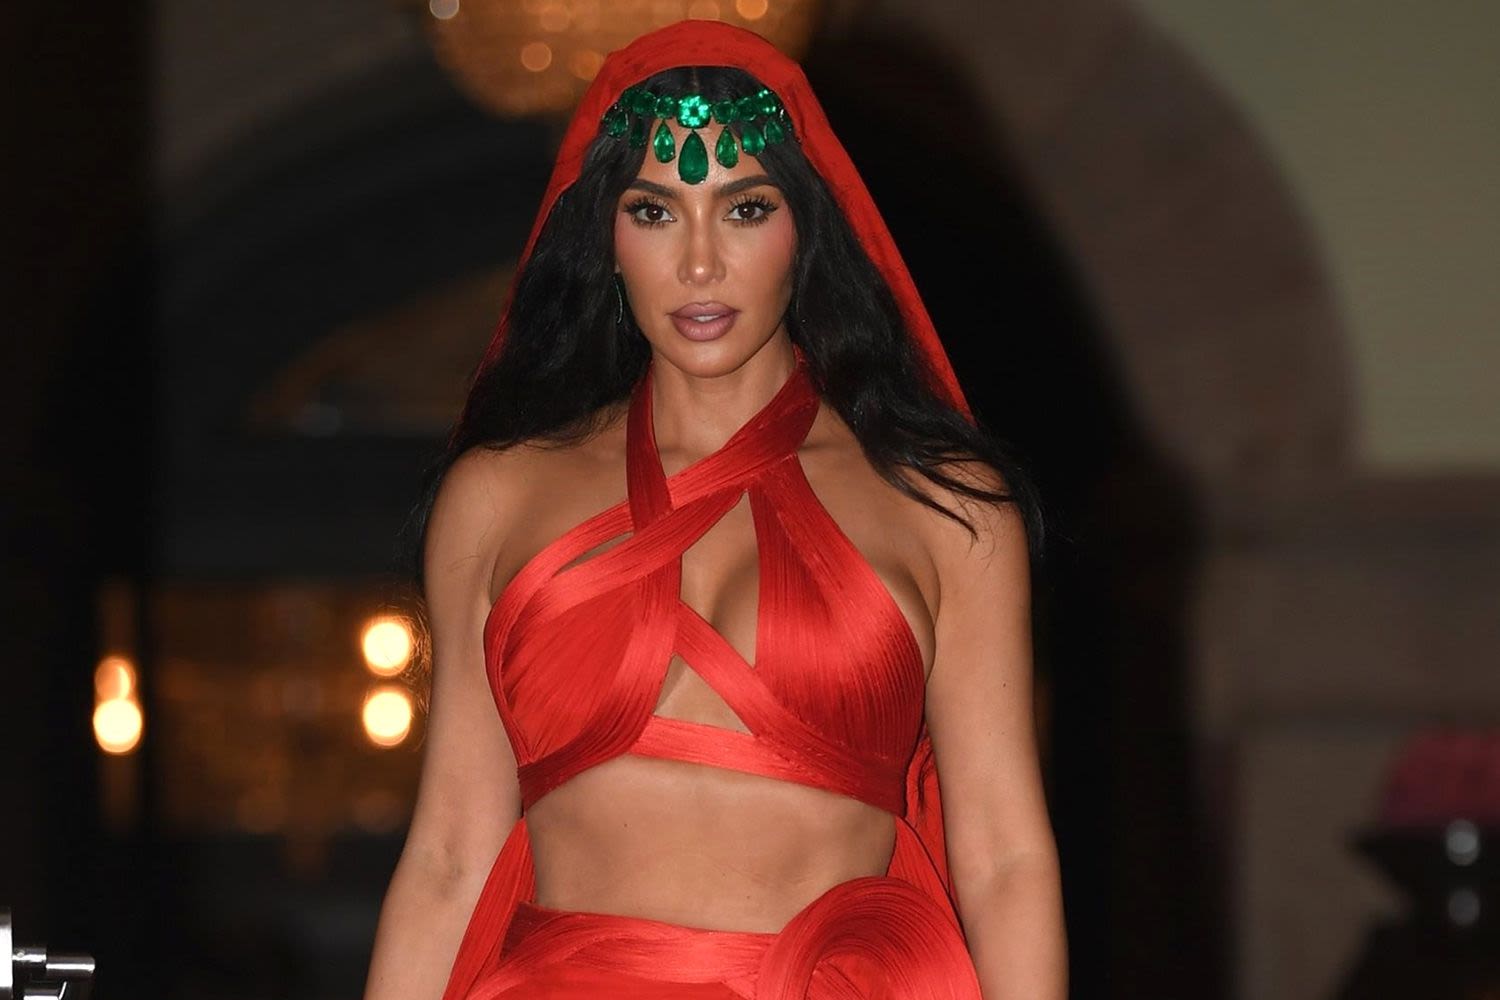 Kim Kardashian Bares Her Midriff in Vibrant Red Look Worn with 500+ Carats of Emeralds at Billionaire Ambani Wedding